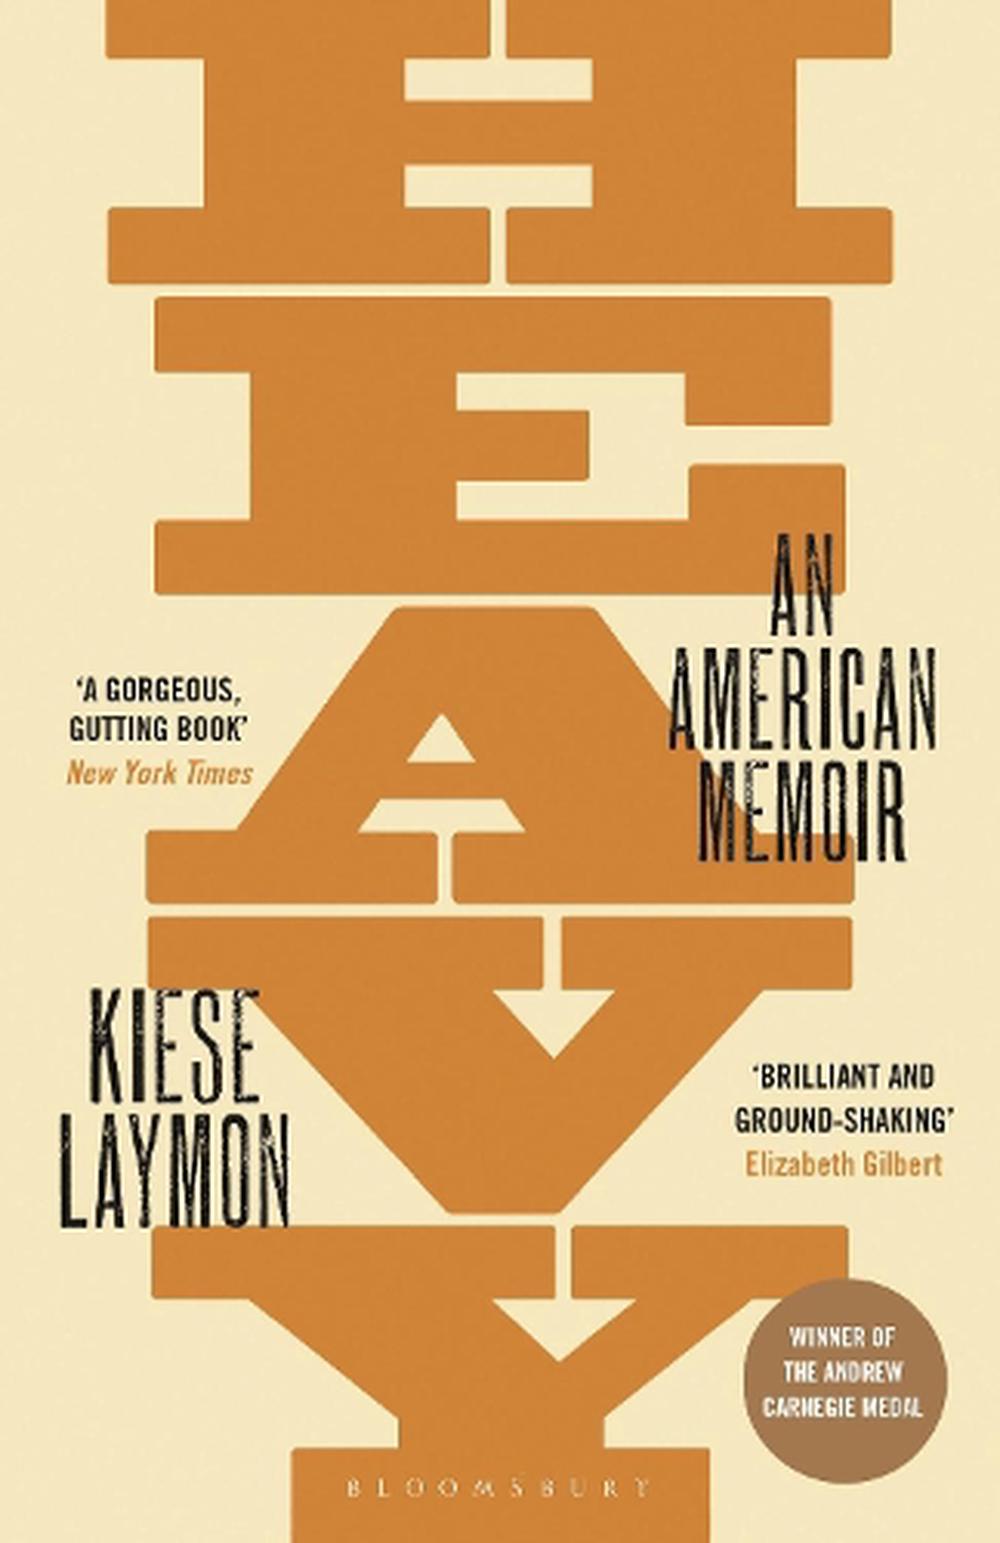 heavy an american memoir book review